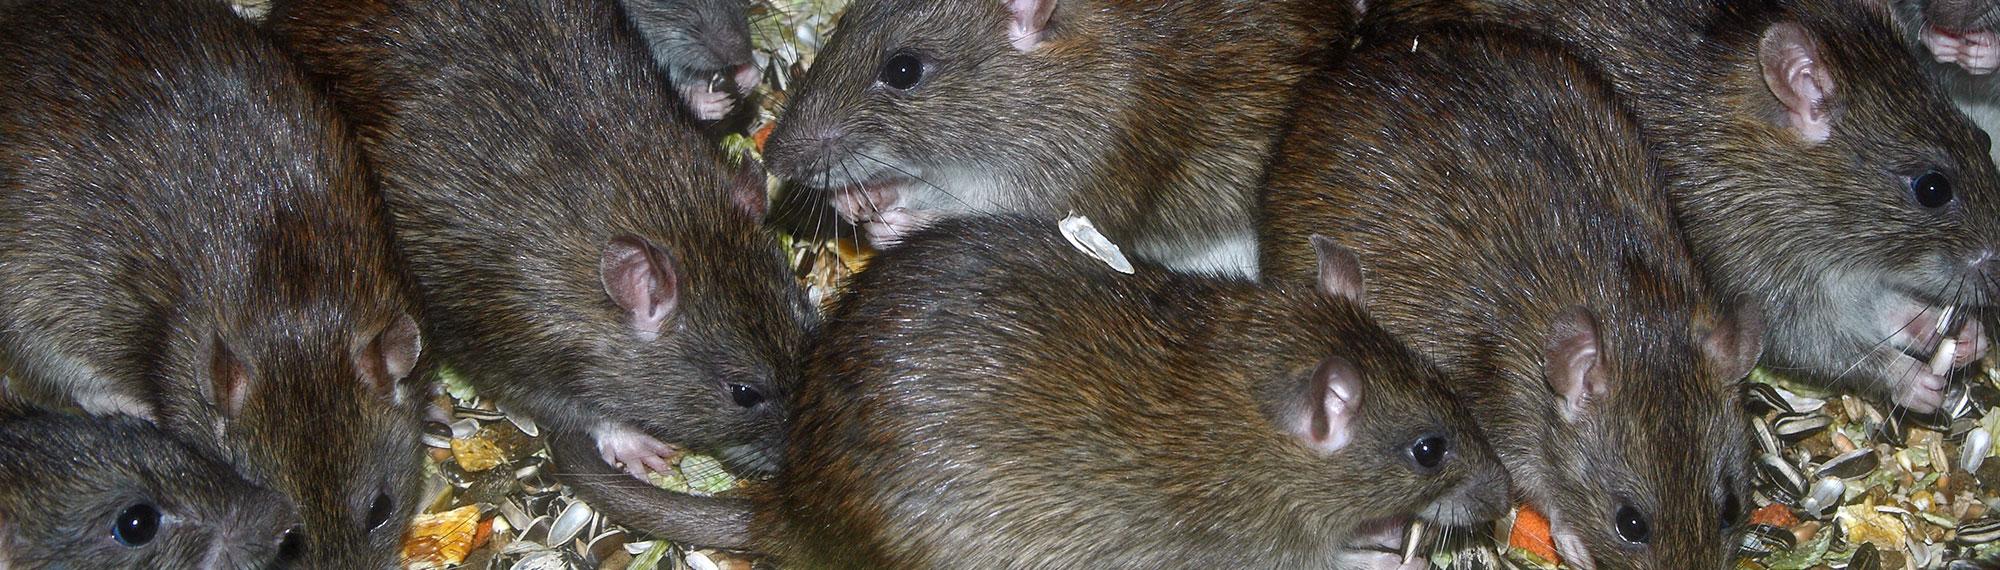 norway rats